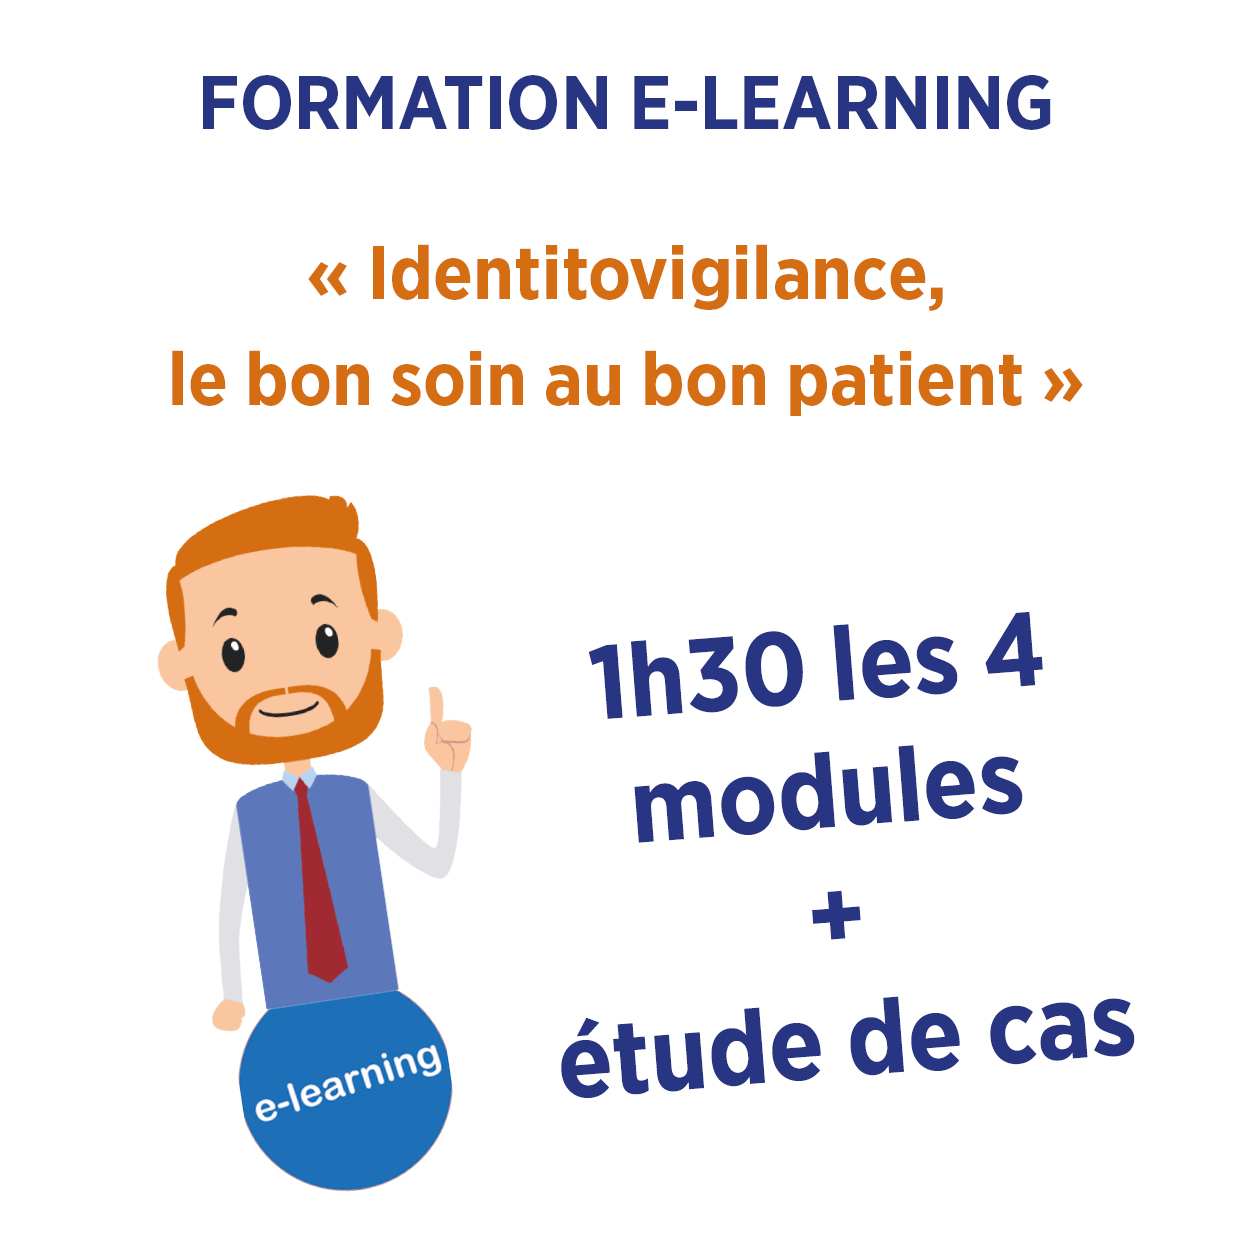 Formation e-learning "Identitovigilance, le bon soin au bon patient"